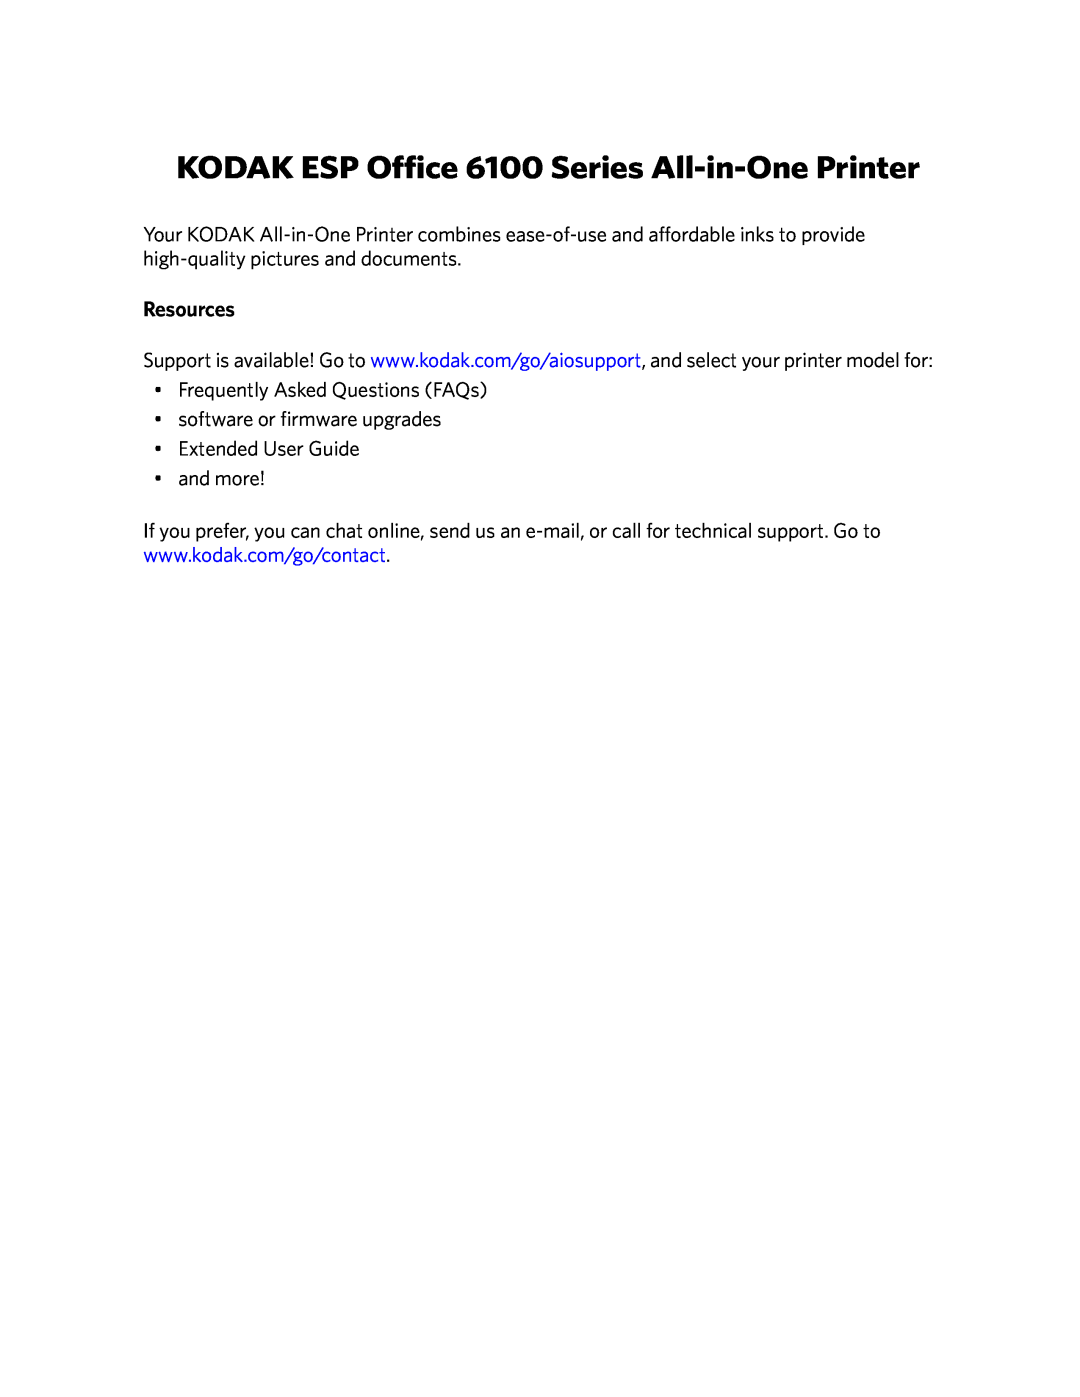 Kodak manual KODAK ESP Office 6100 Series All-in-OnePrinter, Resources 